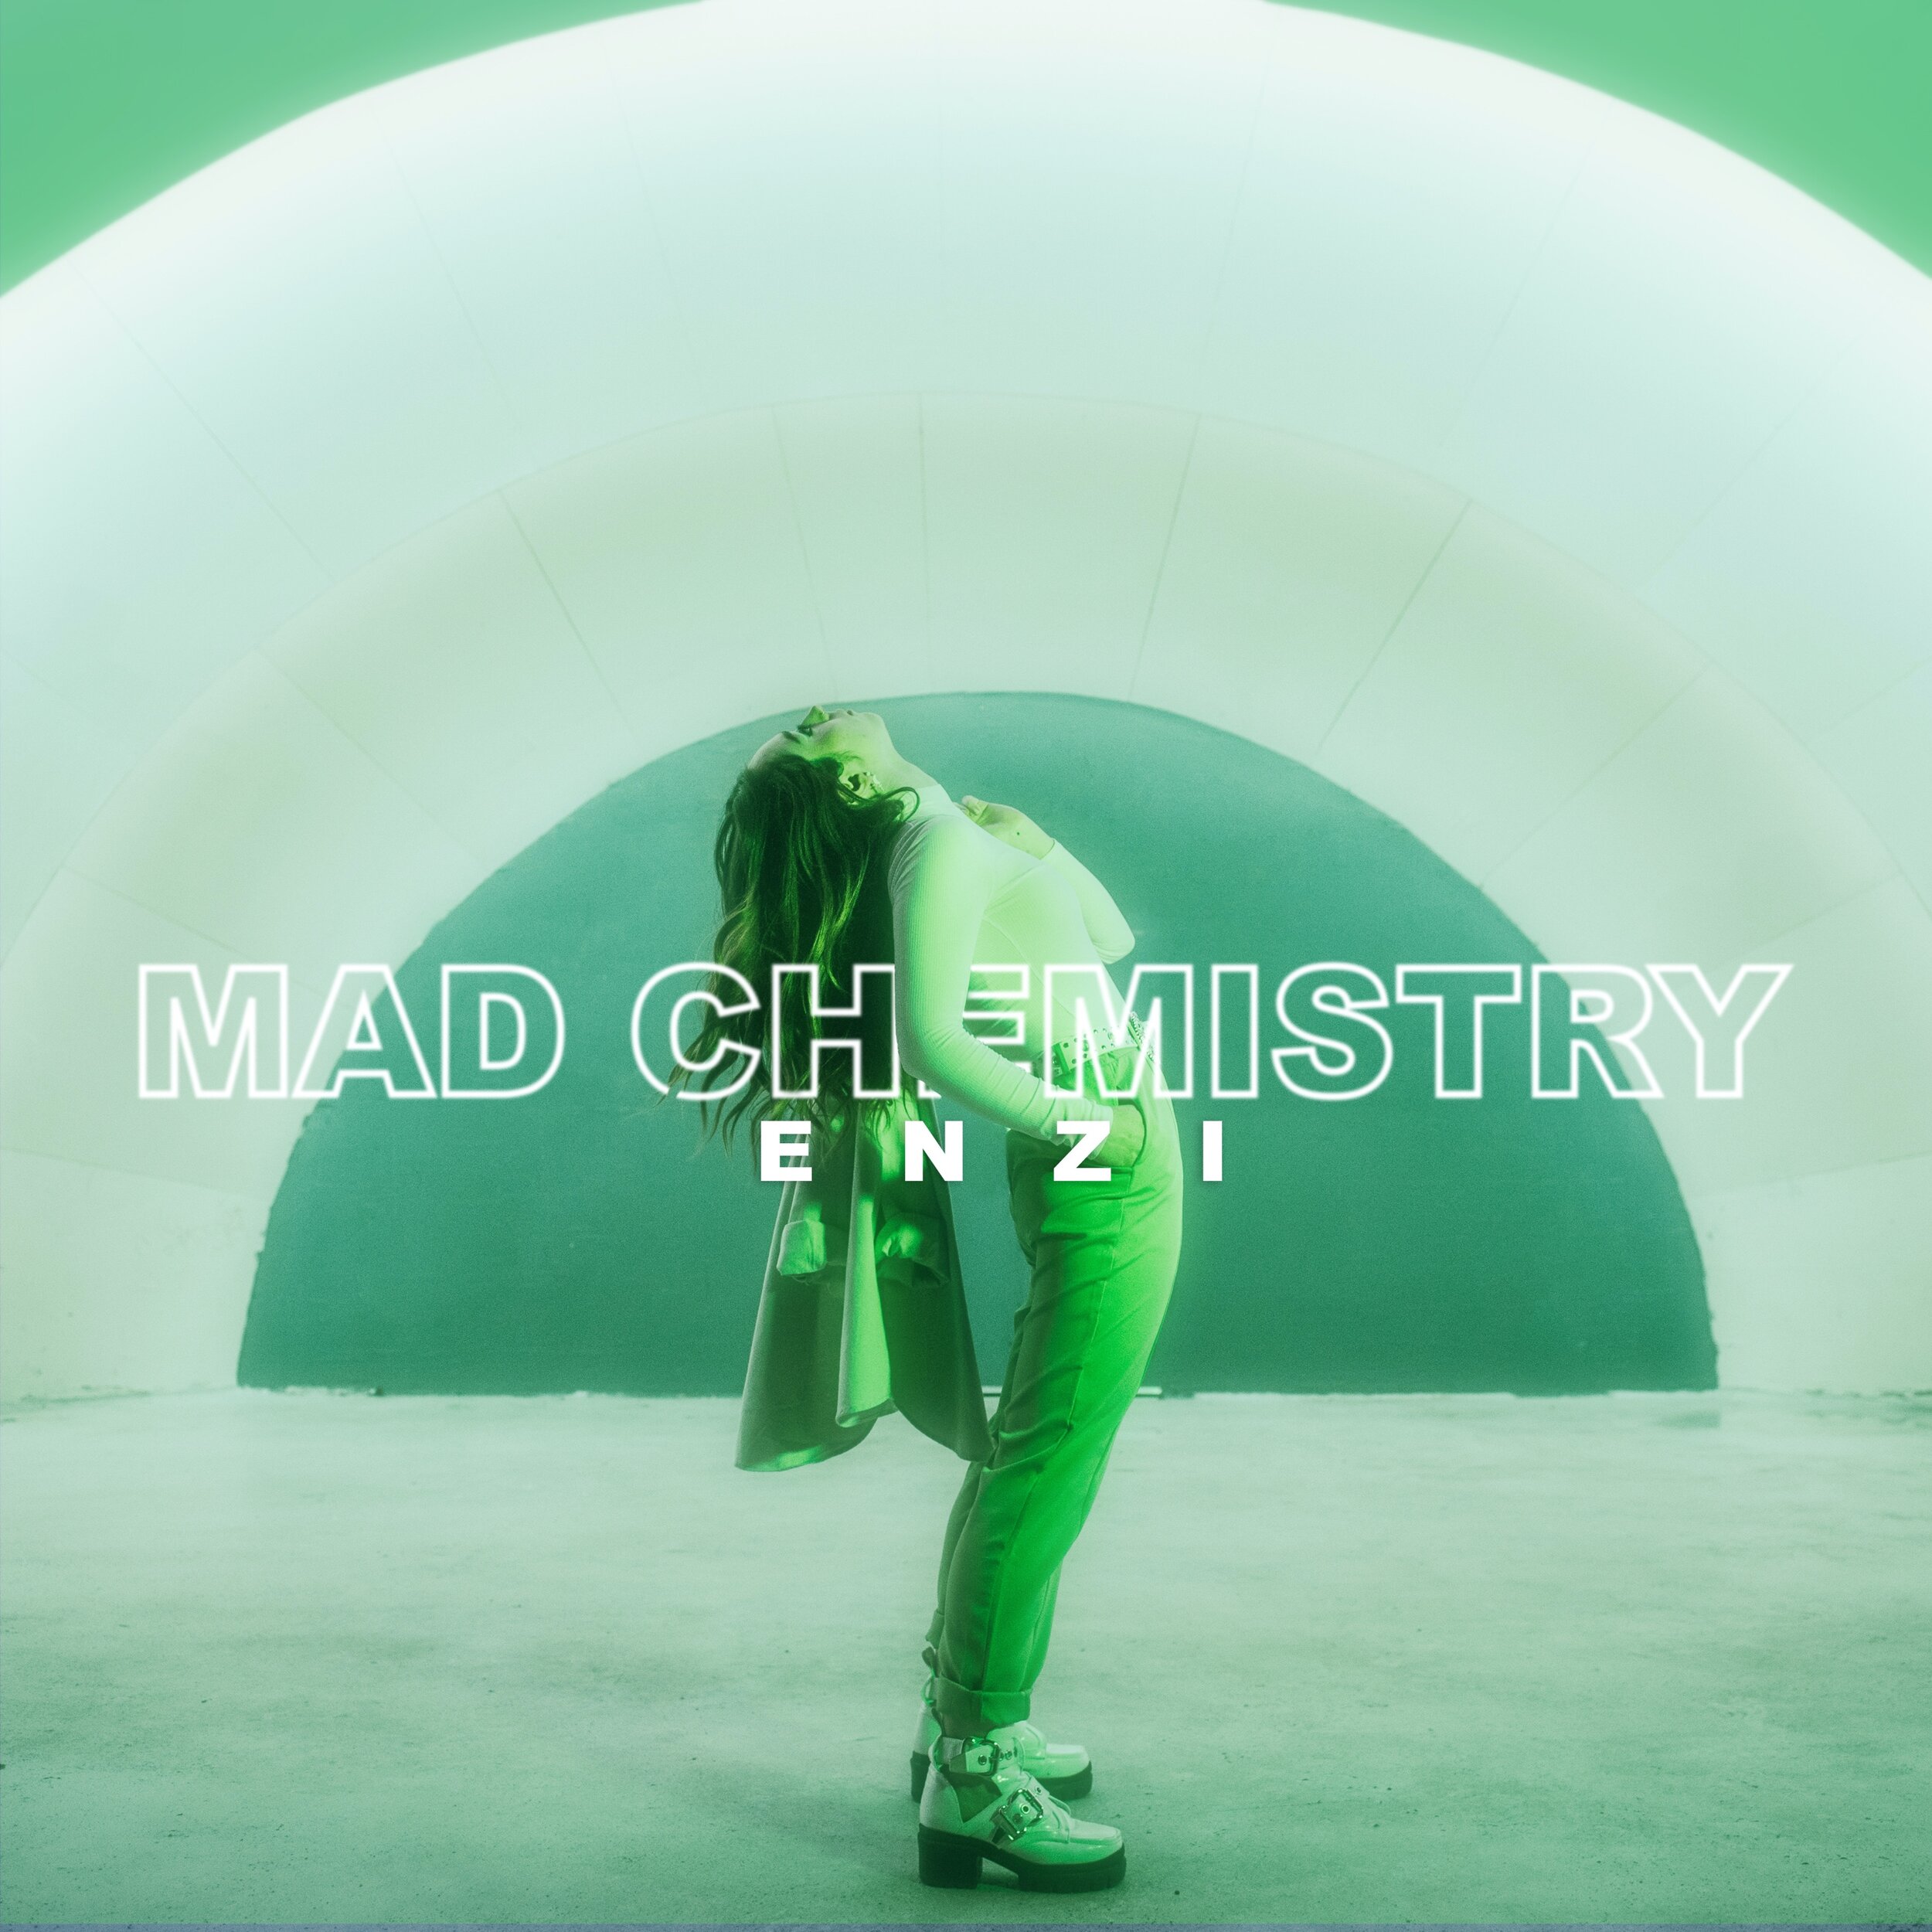 ENZI - "Mad Chemistry"